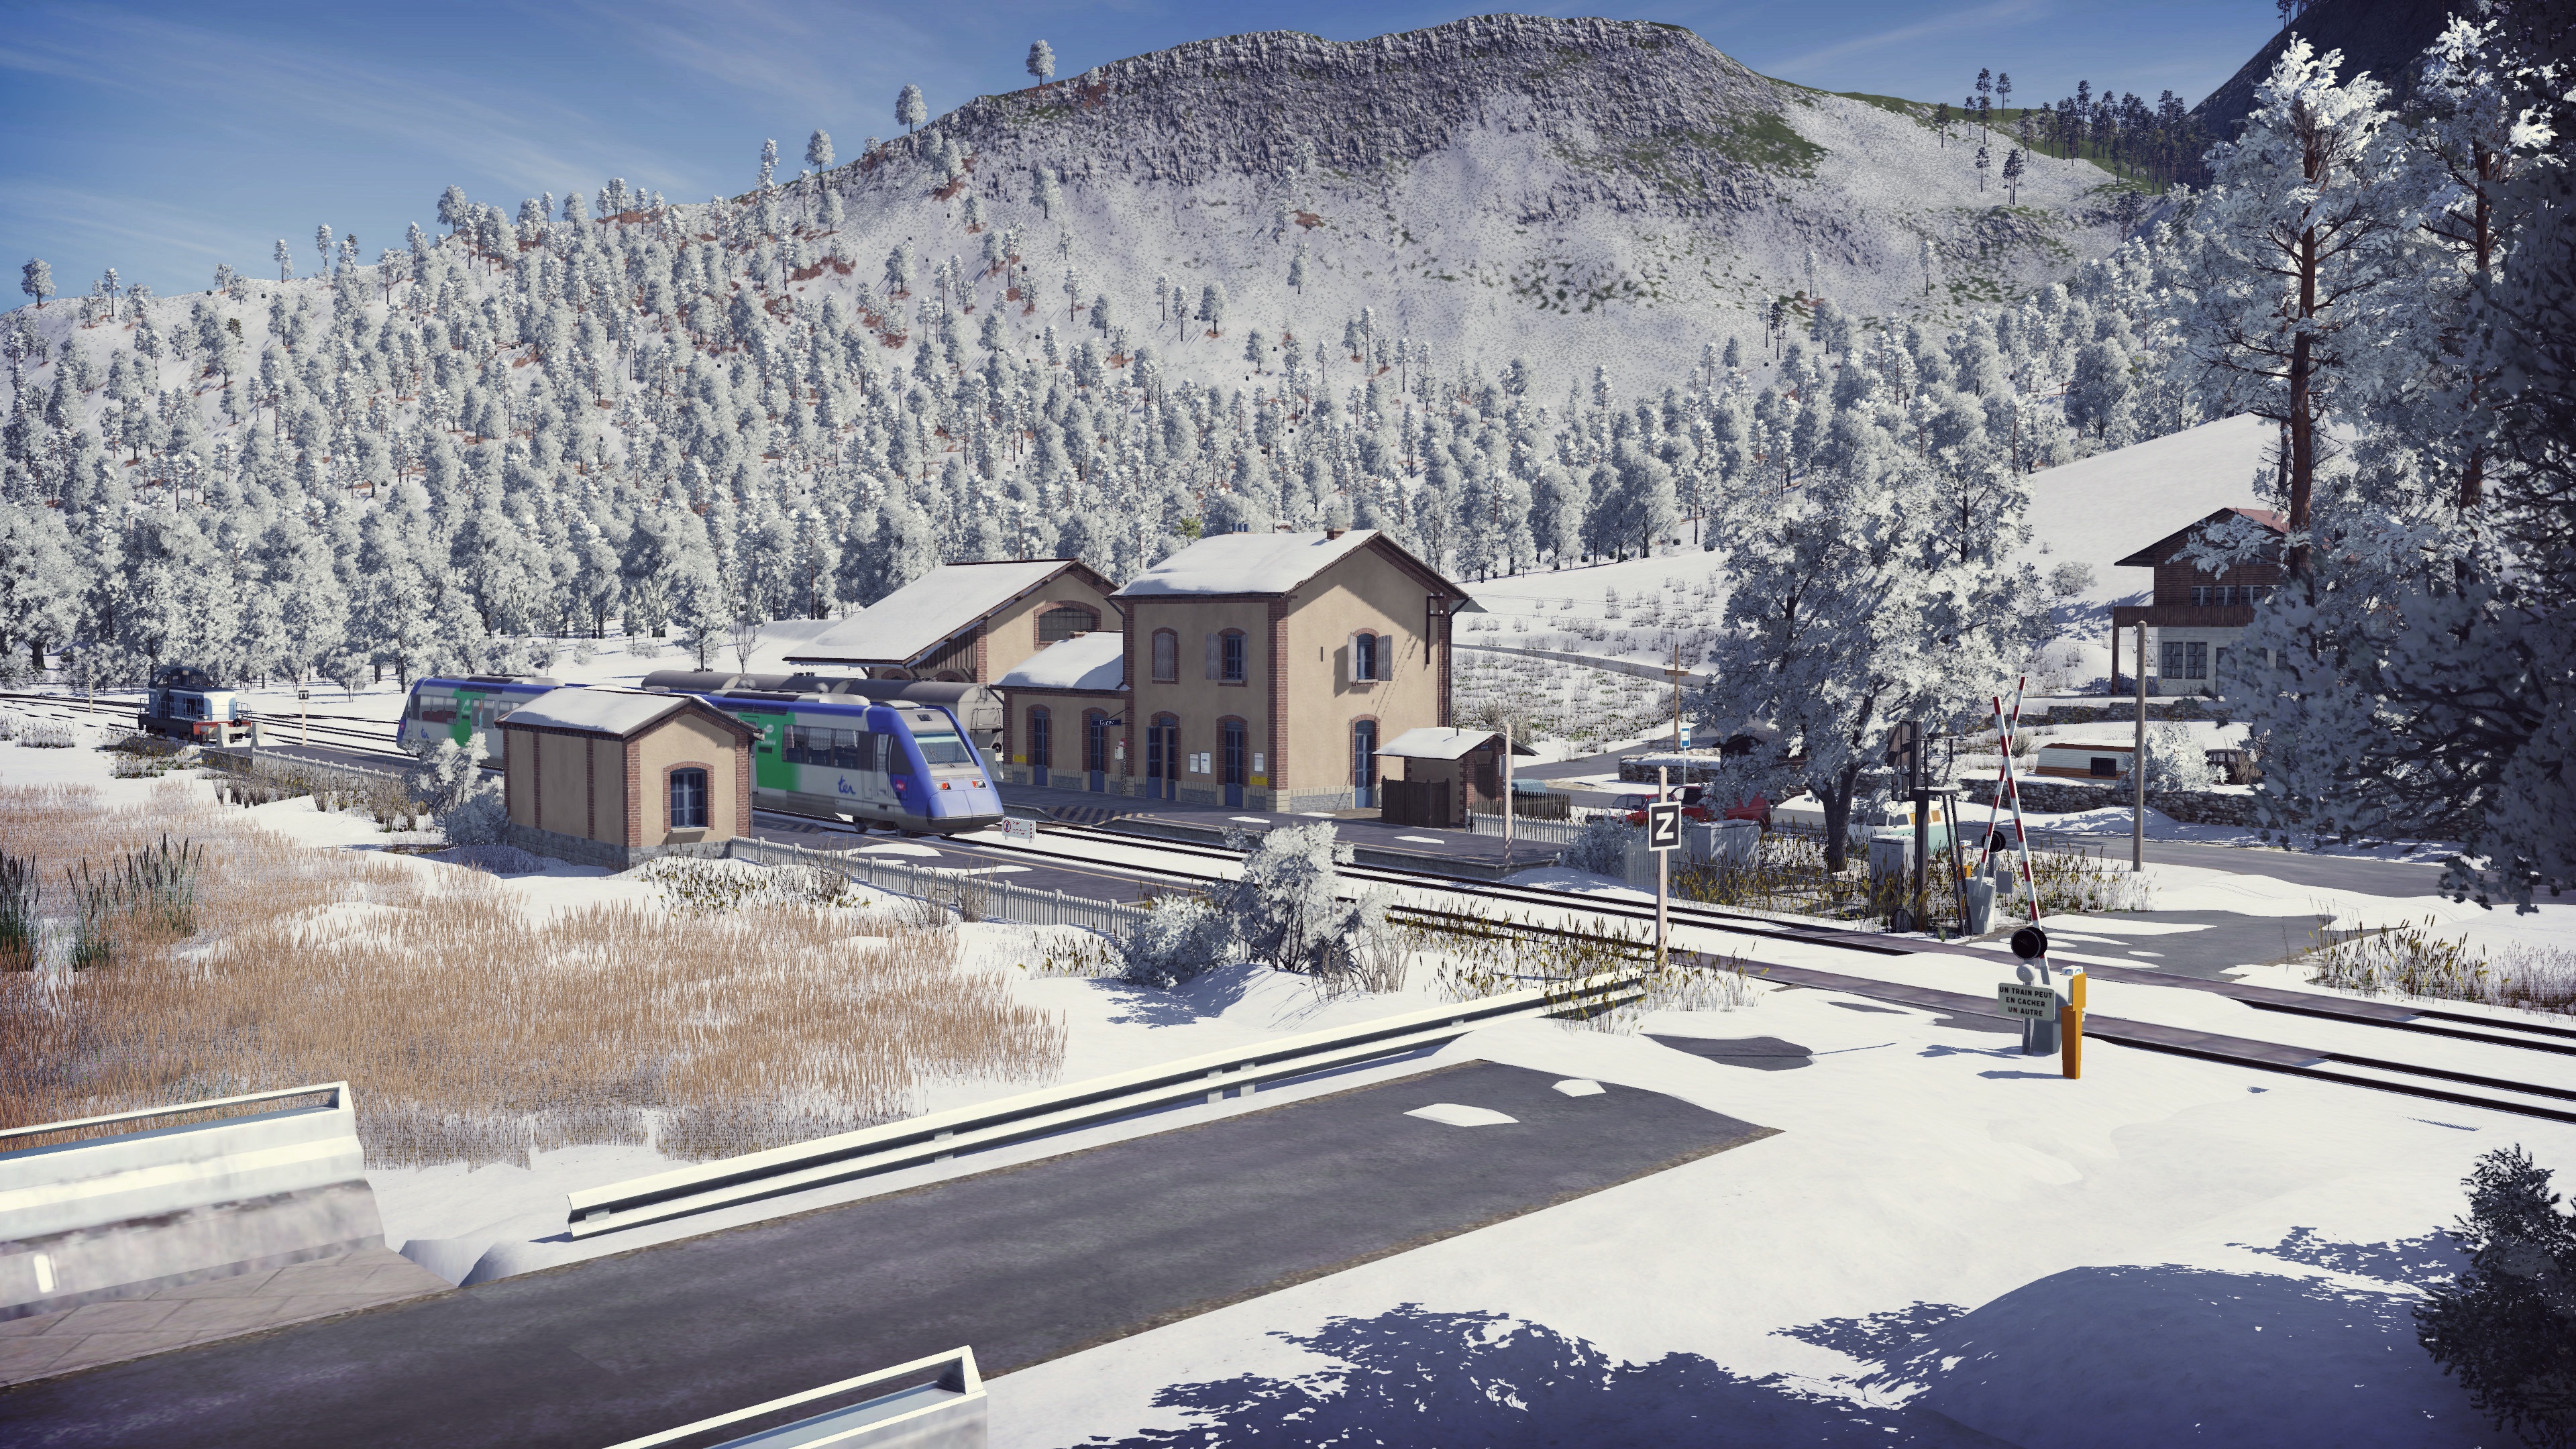 Snowy station